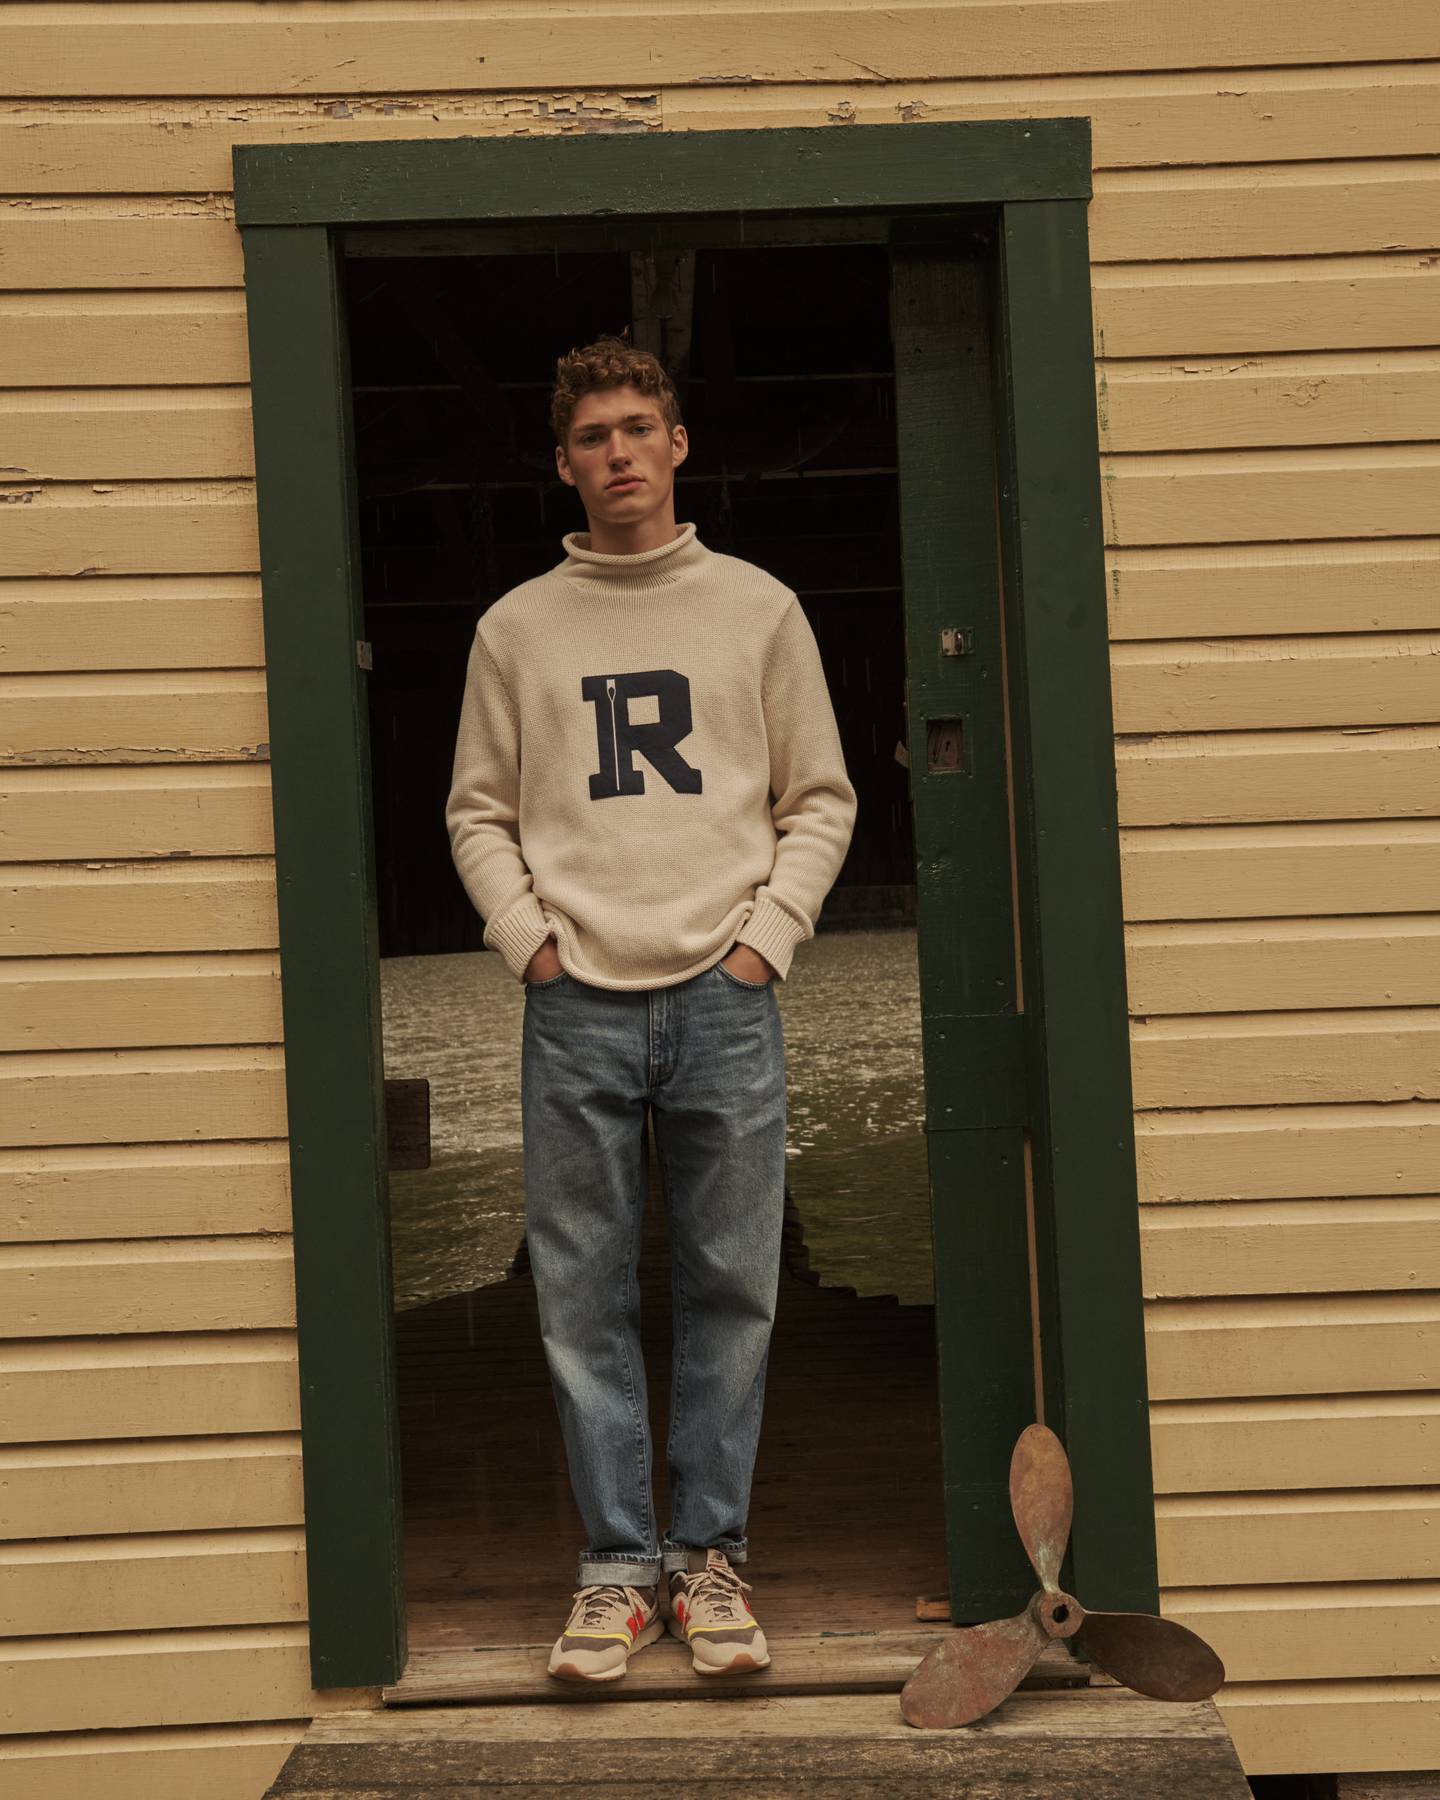 Man stands in doorway wearing mockneck sweatshirt with the letter 'R'